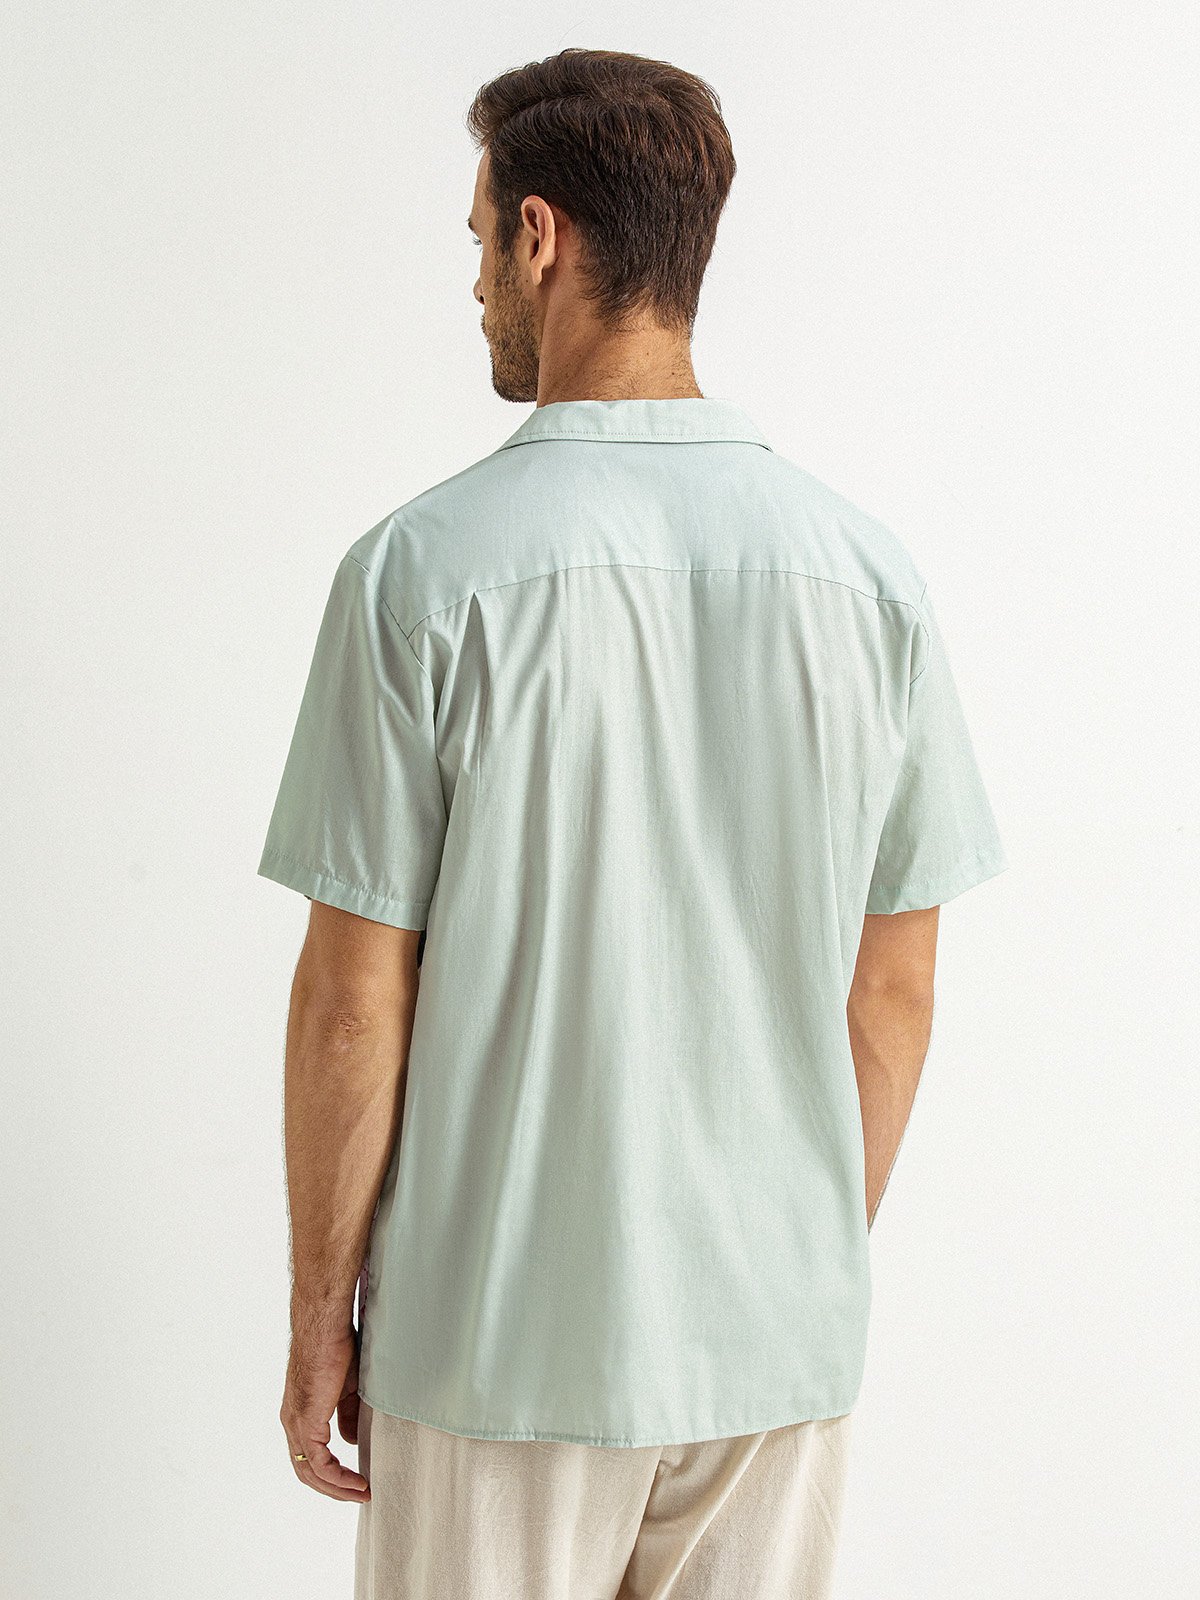 Hardaddy® Cotton Rooster Aloha Shirt